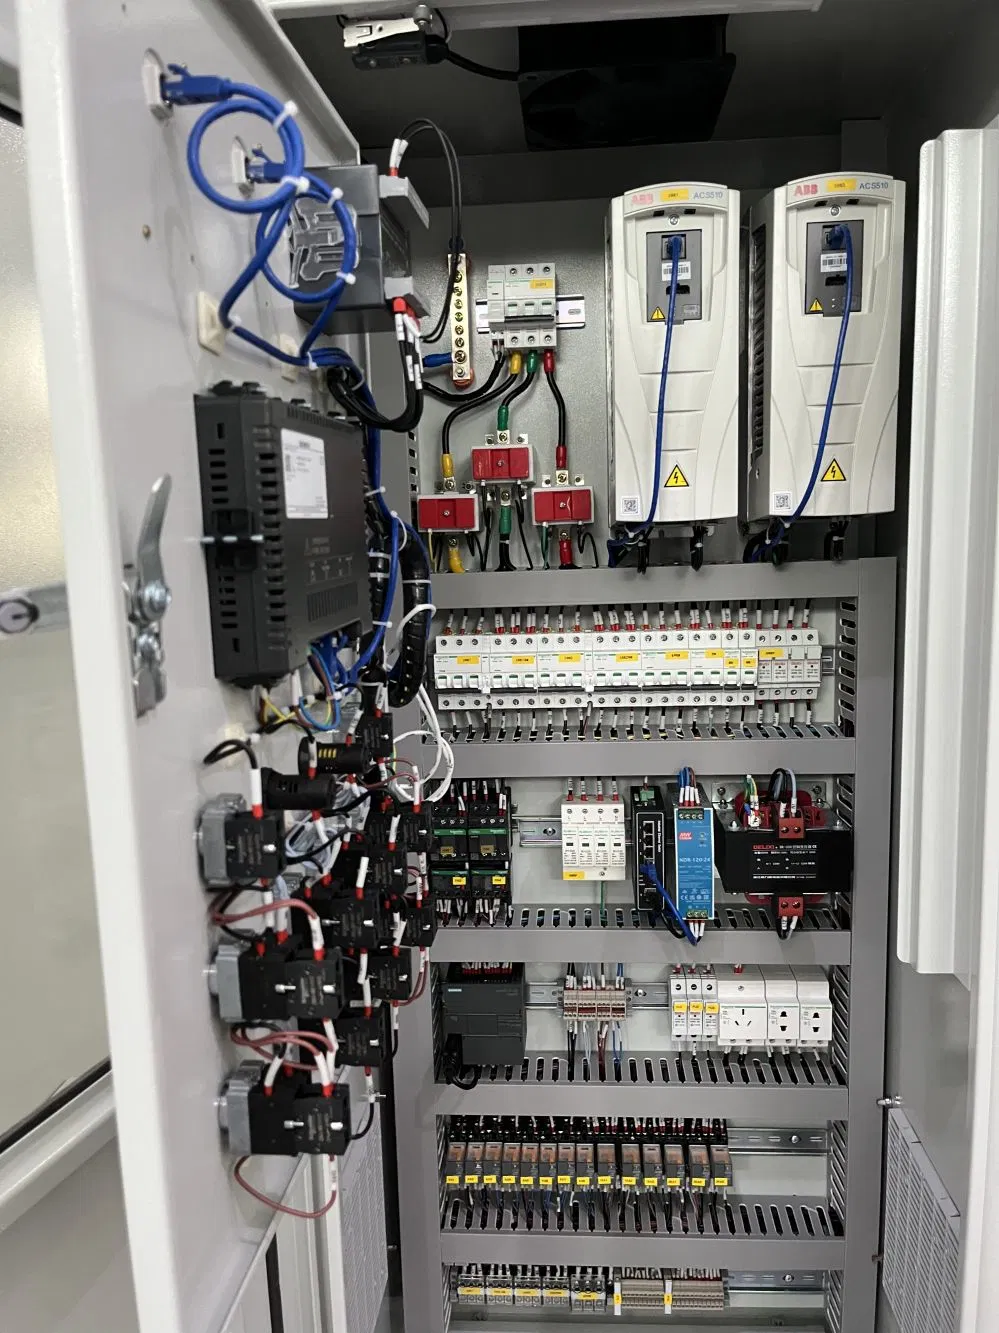 Internal and External Door Constant Pressure Water Pump Control Panel HMI